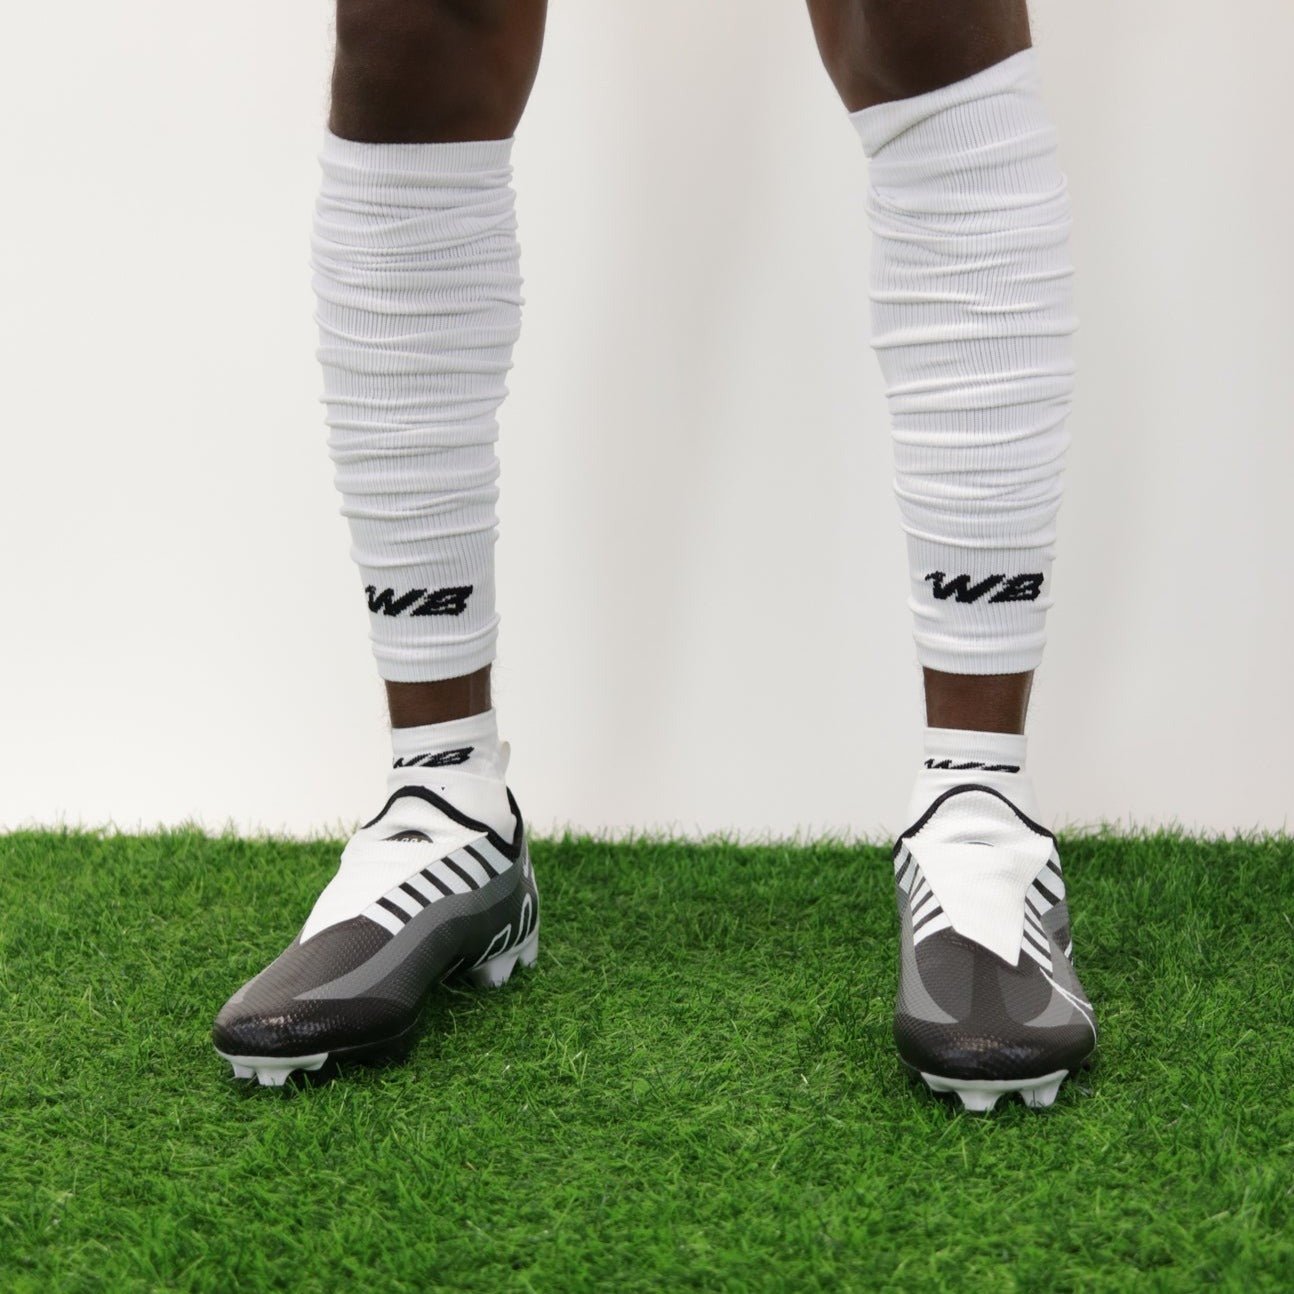 ADULT FOOTBALL LEG SLEEVES 2.0 (WHITE) - We Ball Sports